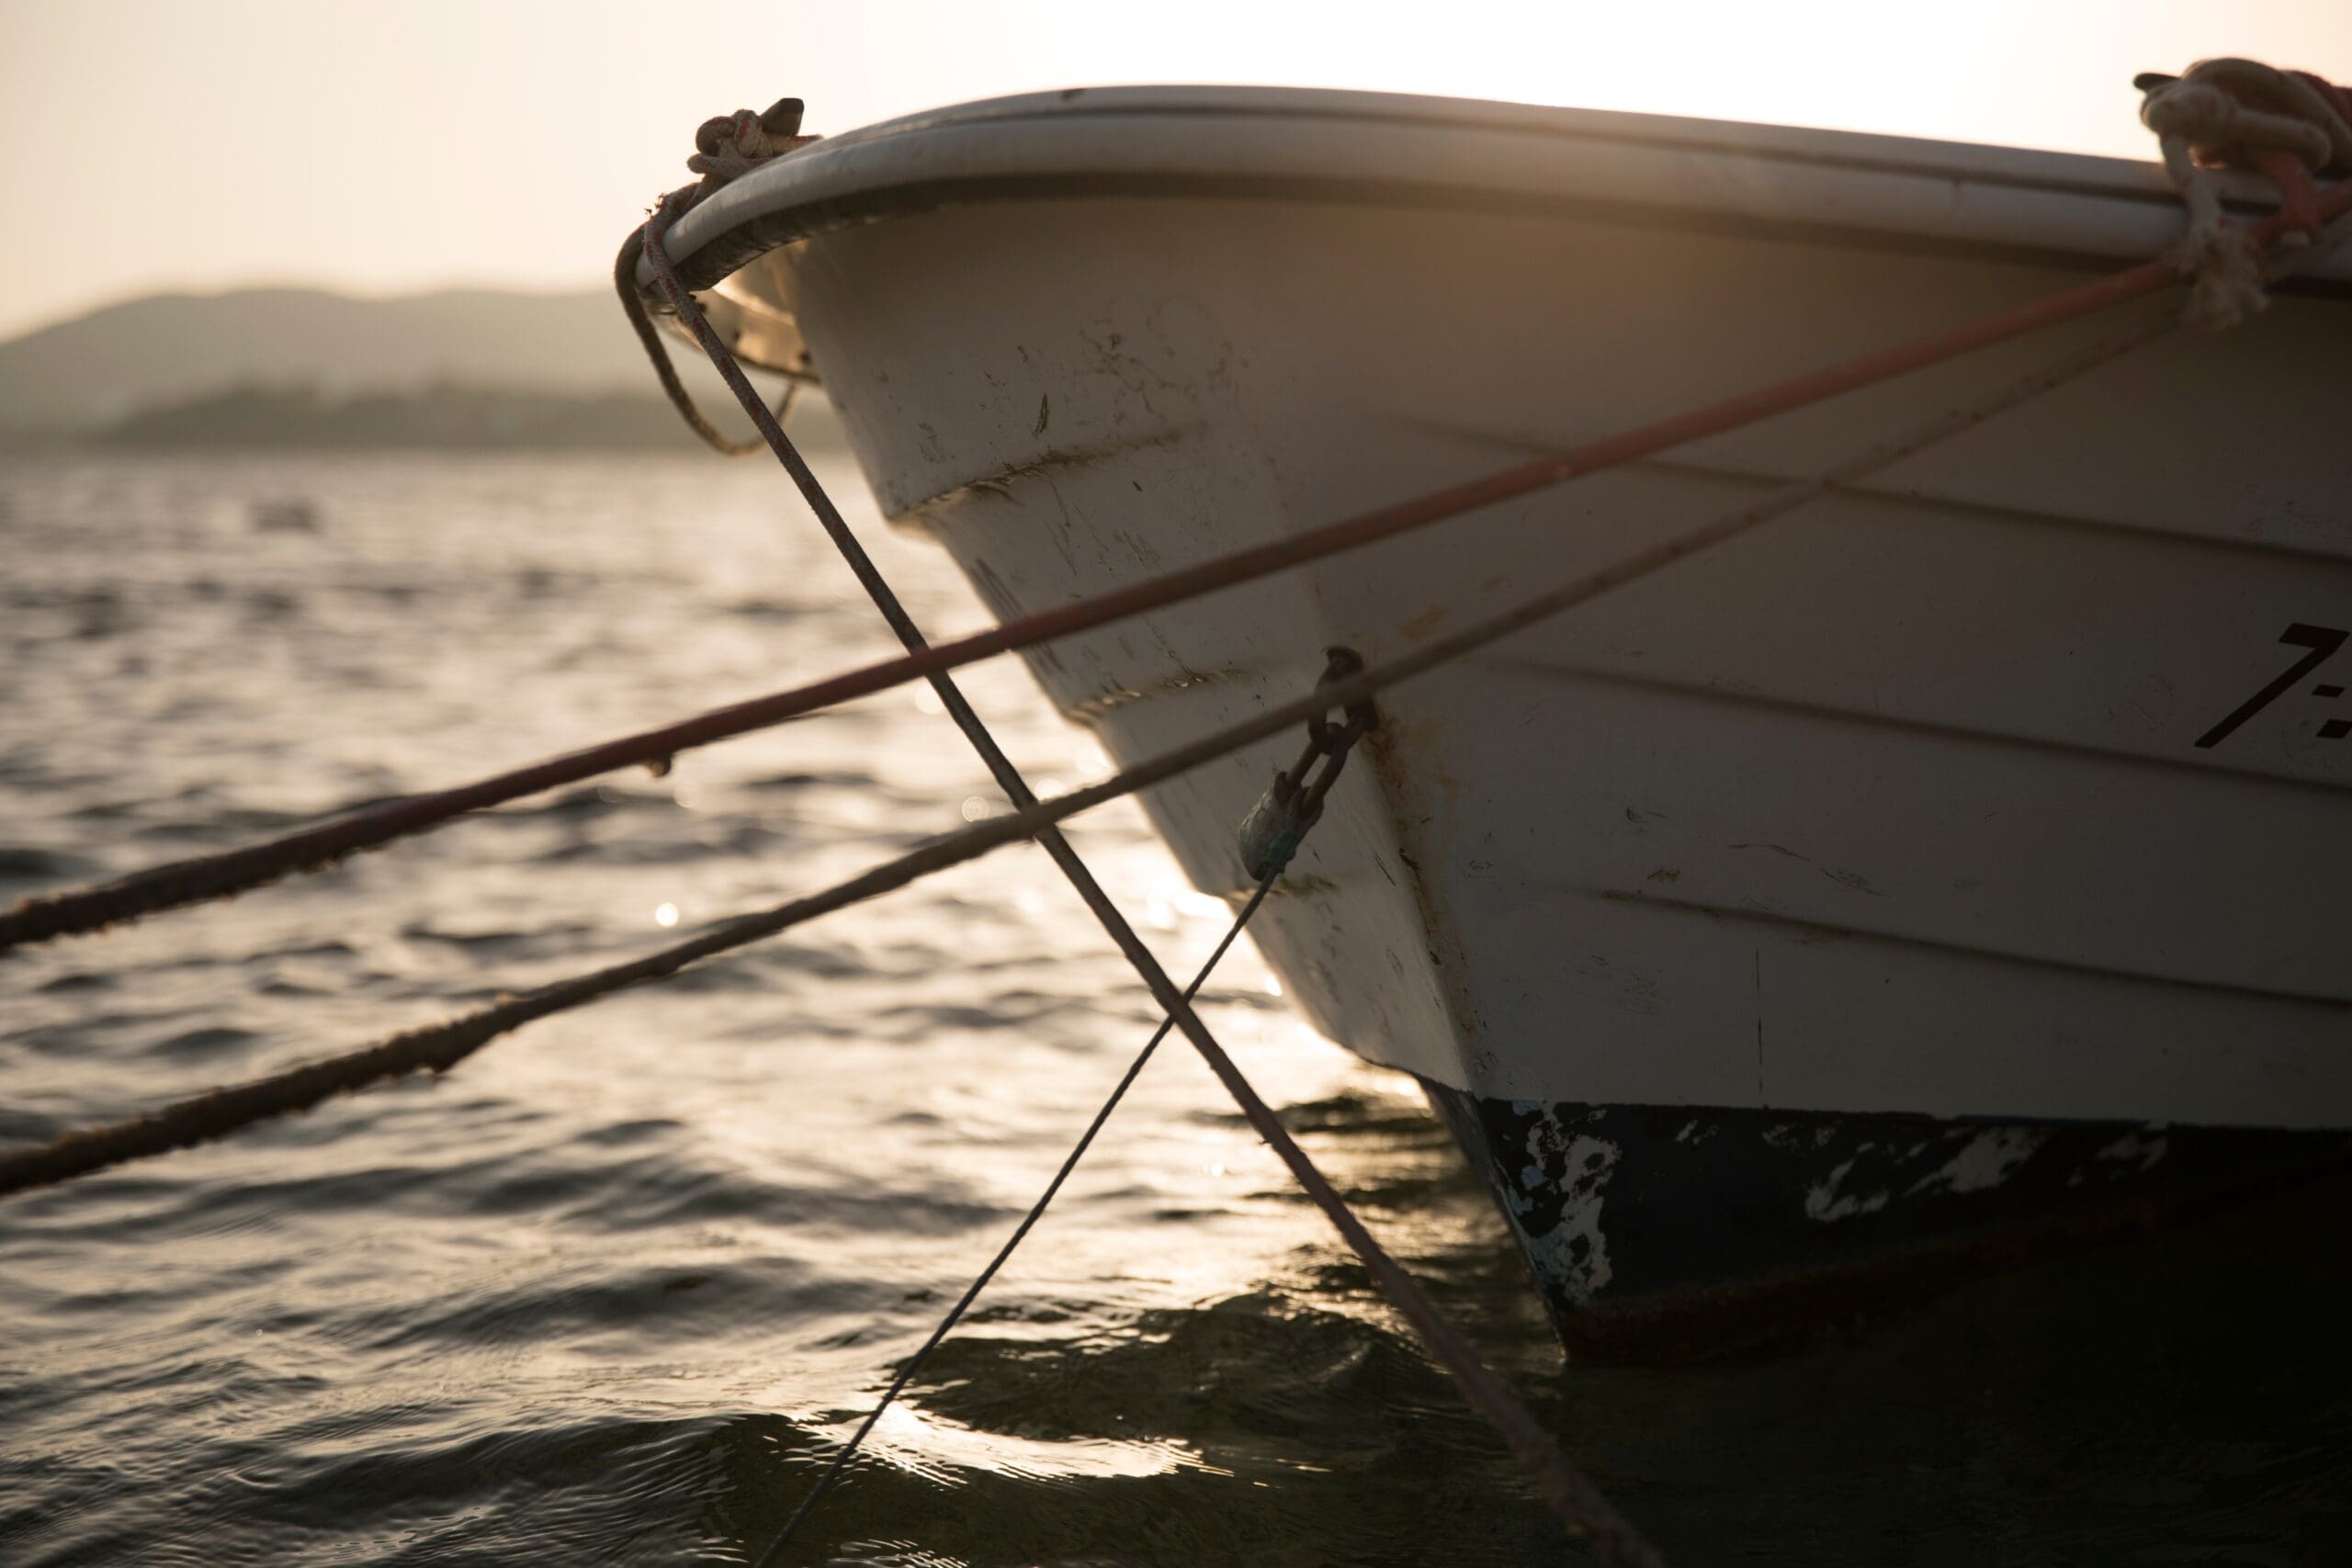 boat-at-sunset-2022-11-14-10-04-29-utc-s